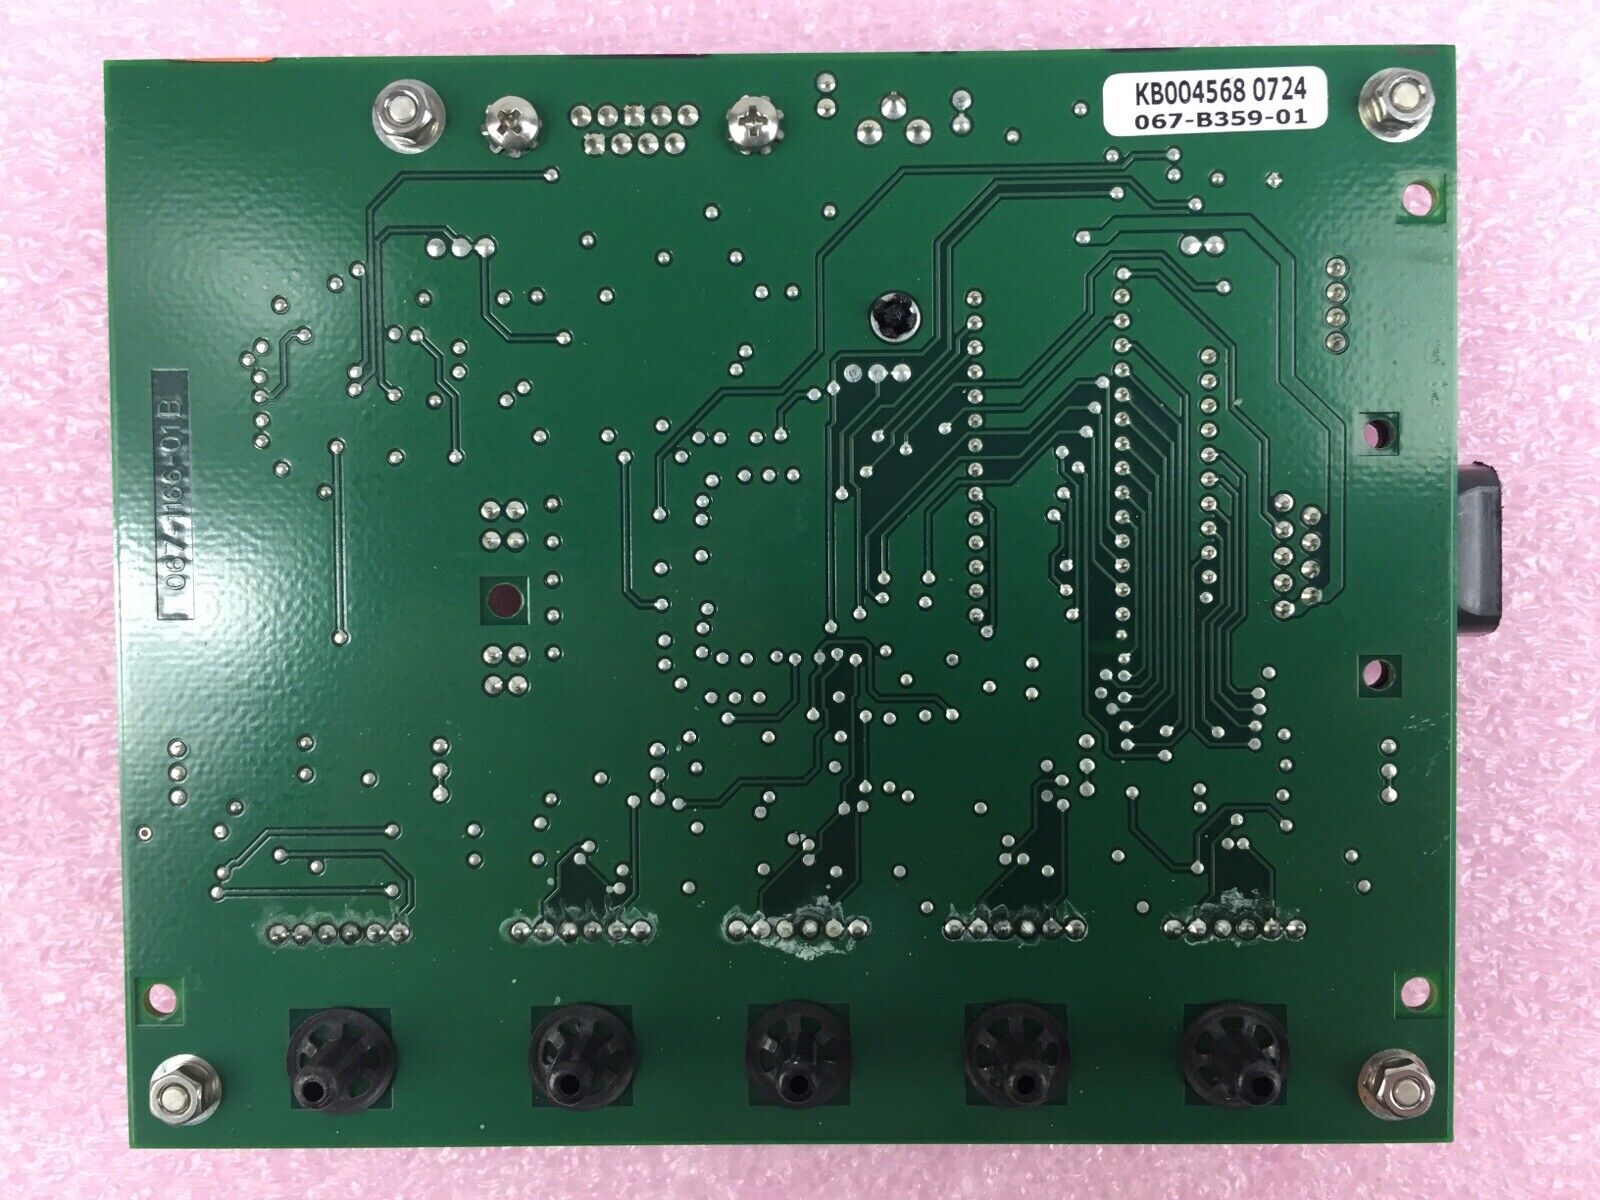 Siemens Bayer 067-B359-01E - Pressure Switch Node Board - 067-1166-01B